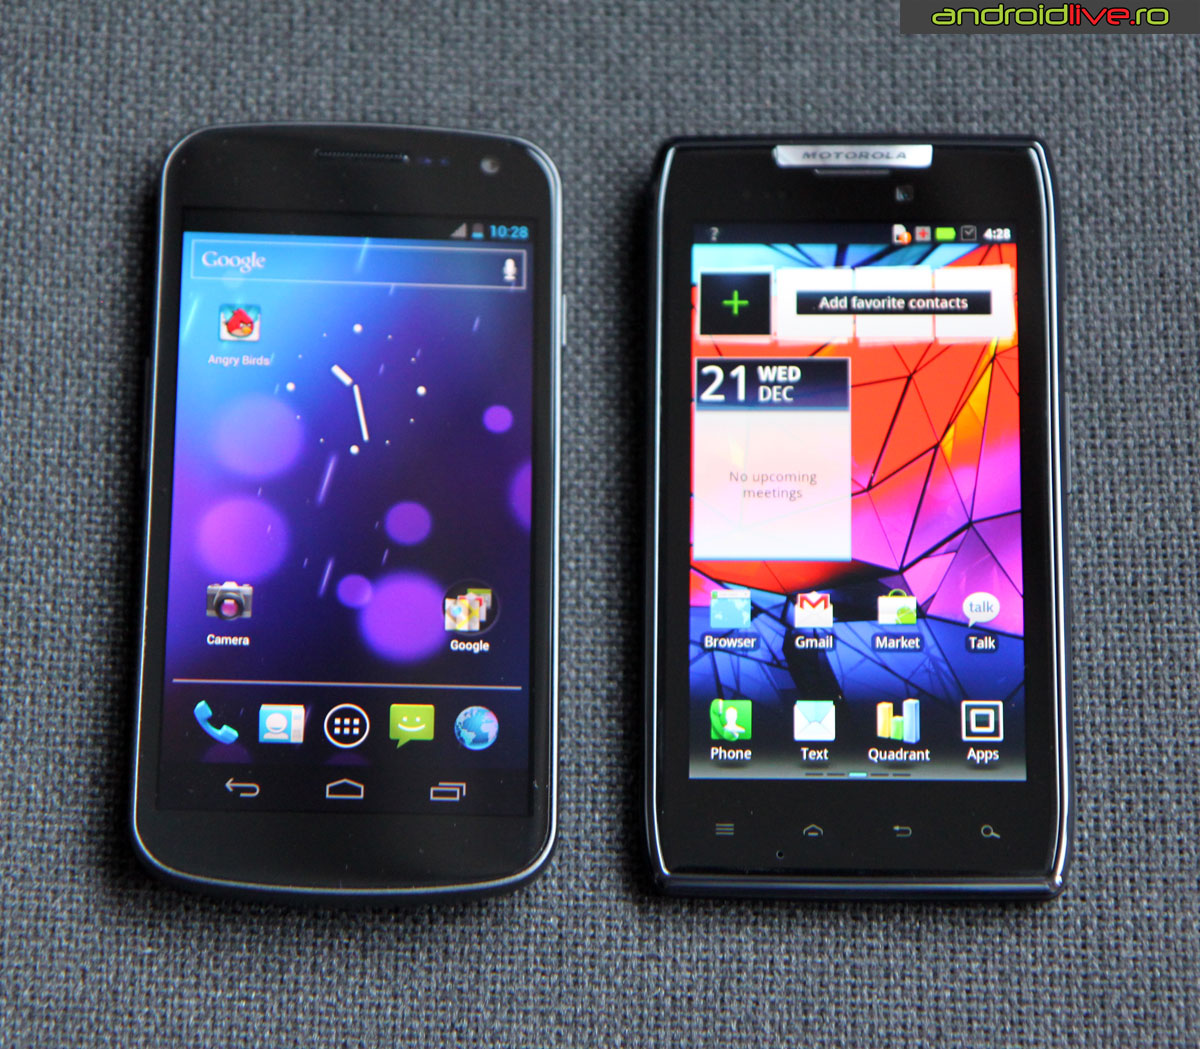 Motorola RAZR XT910 versus Galaxy Nexus